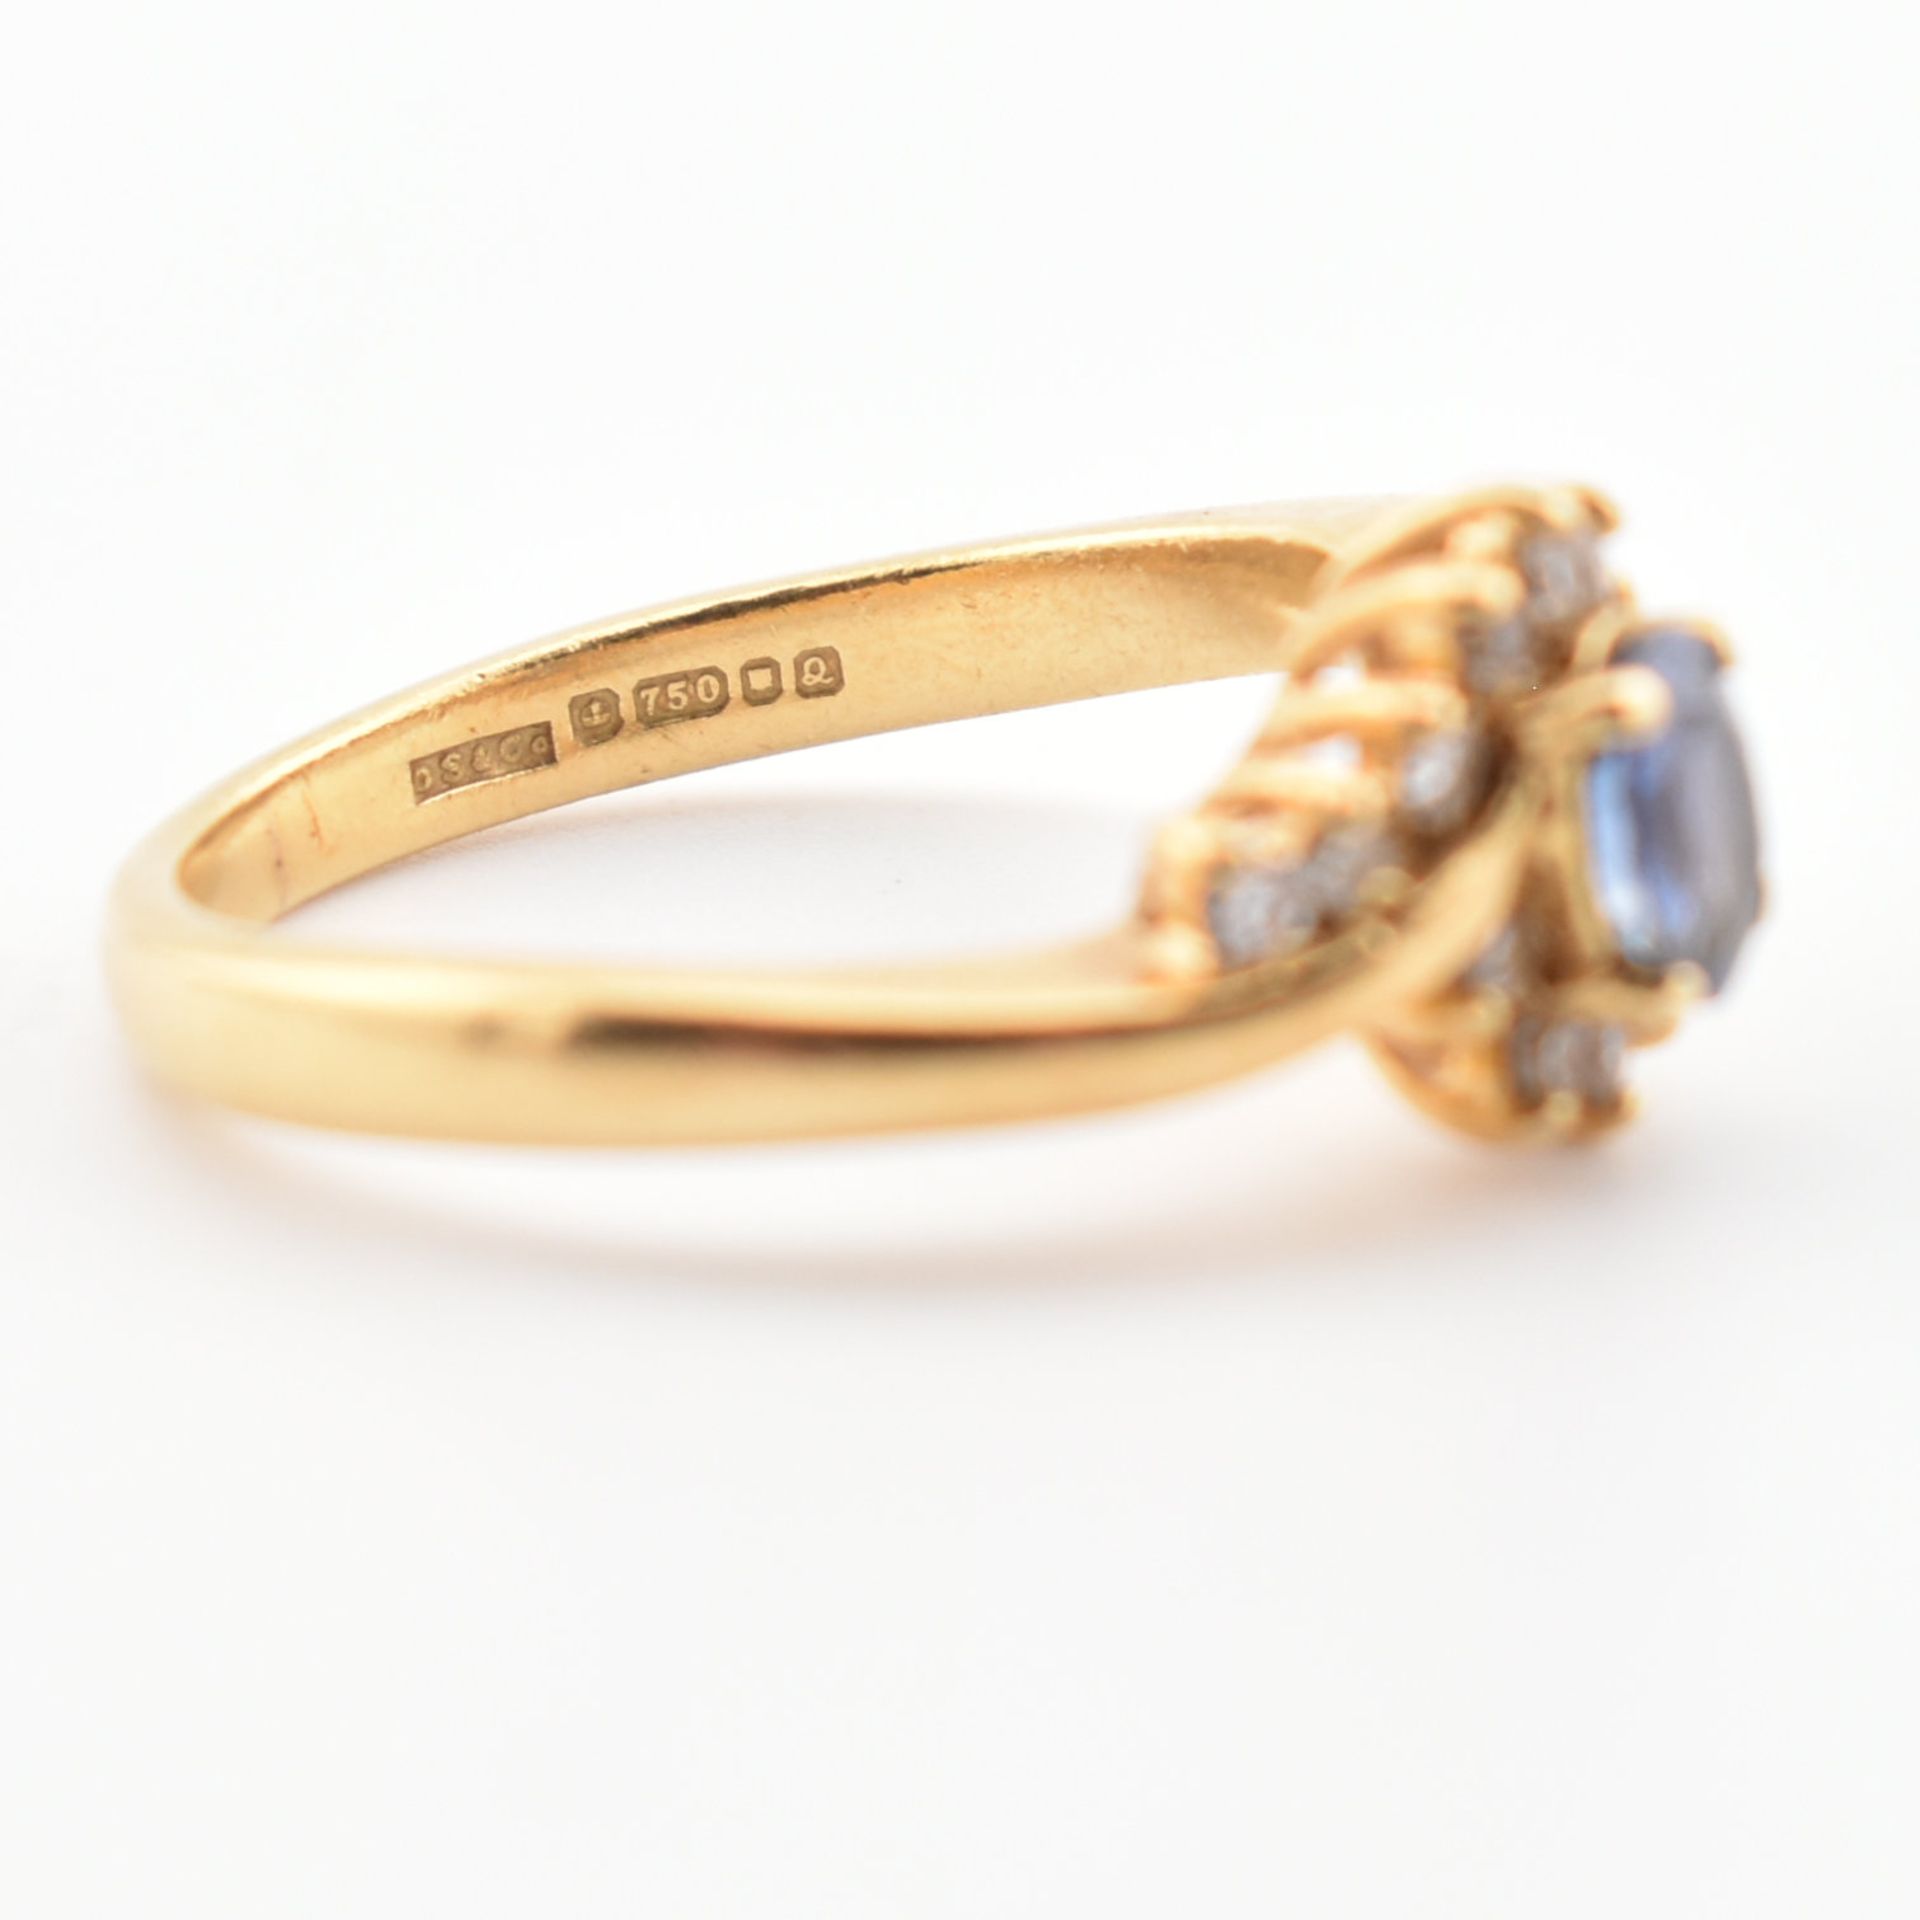 HALLMARKED 18CT GOLD CEYLON SAPPHIRE & DIAMOND RING - Image 7 of 8